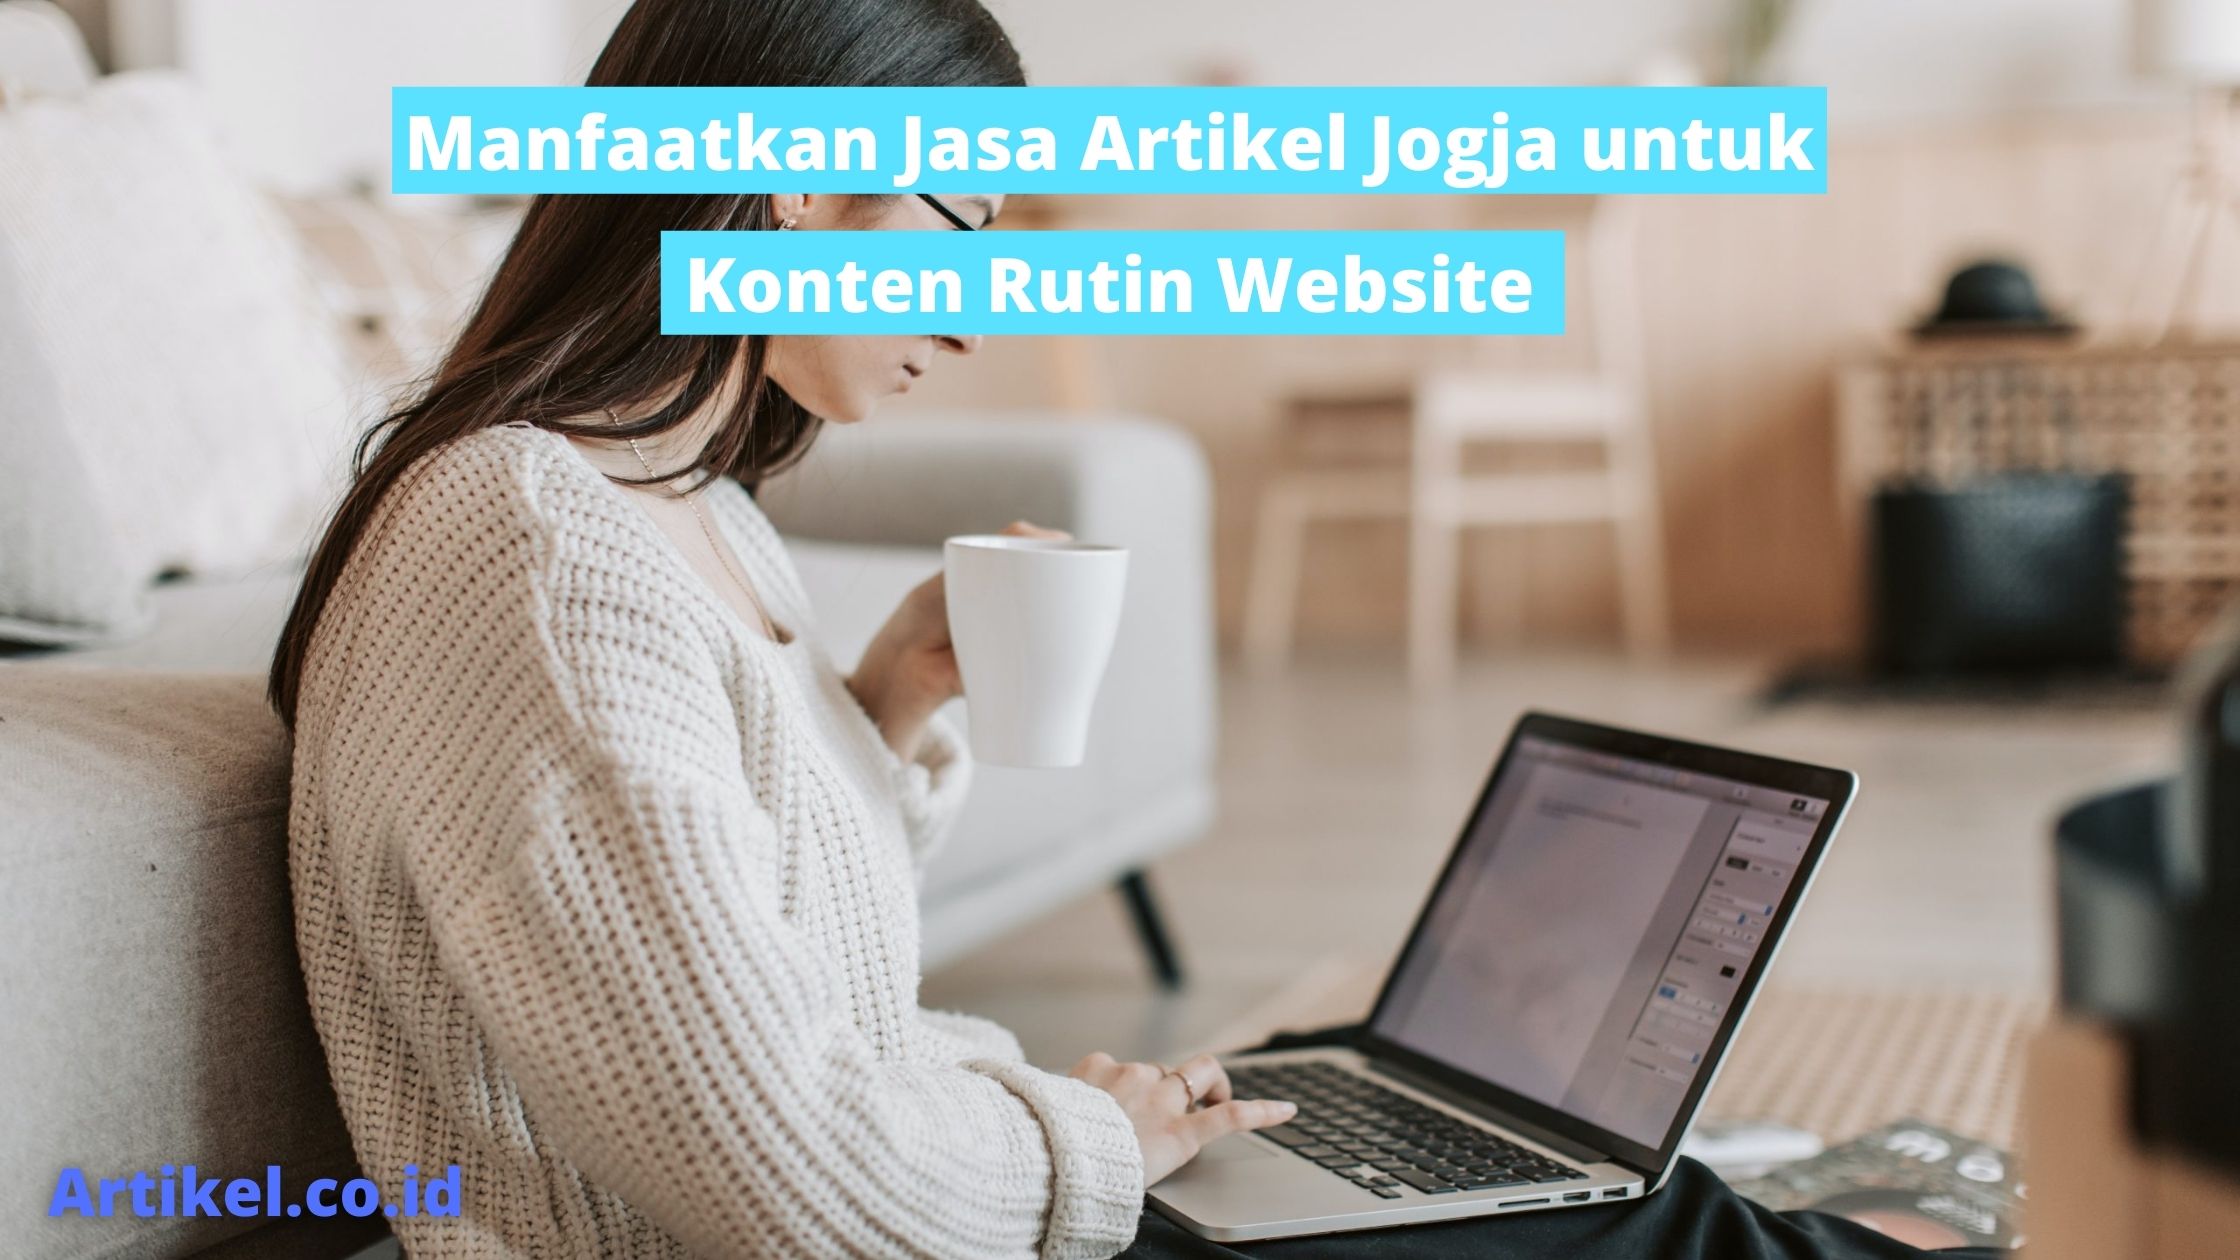 Manfaatkan Jasa Artikel Jogja untuk Konten Rutin Website